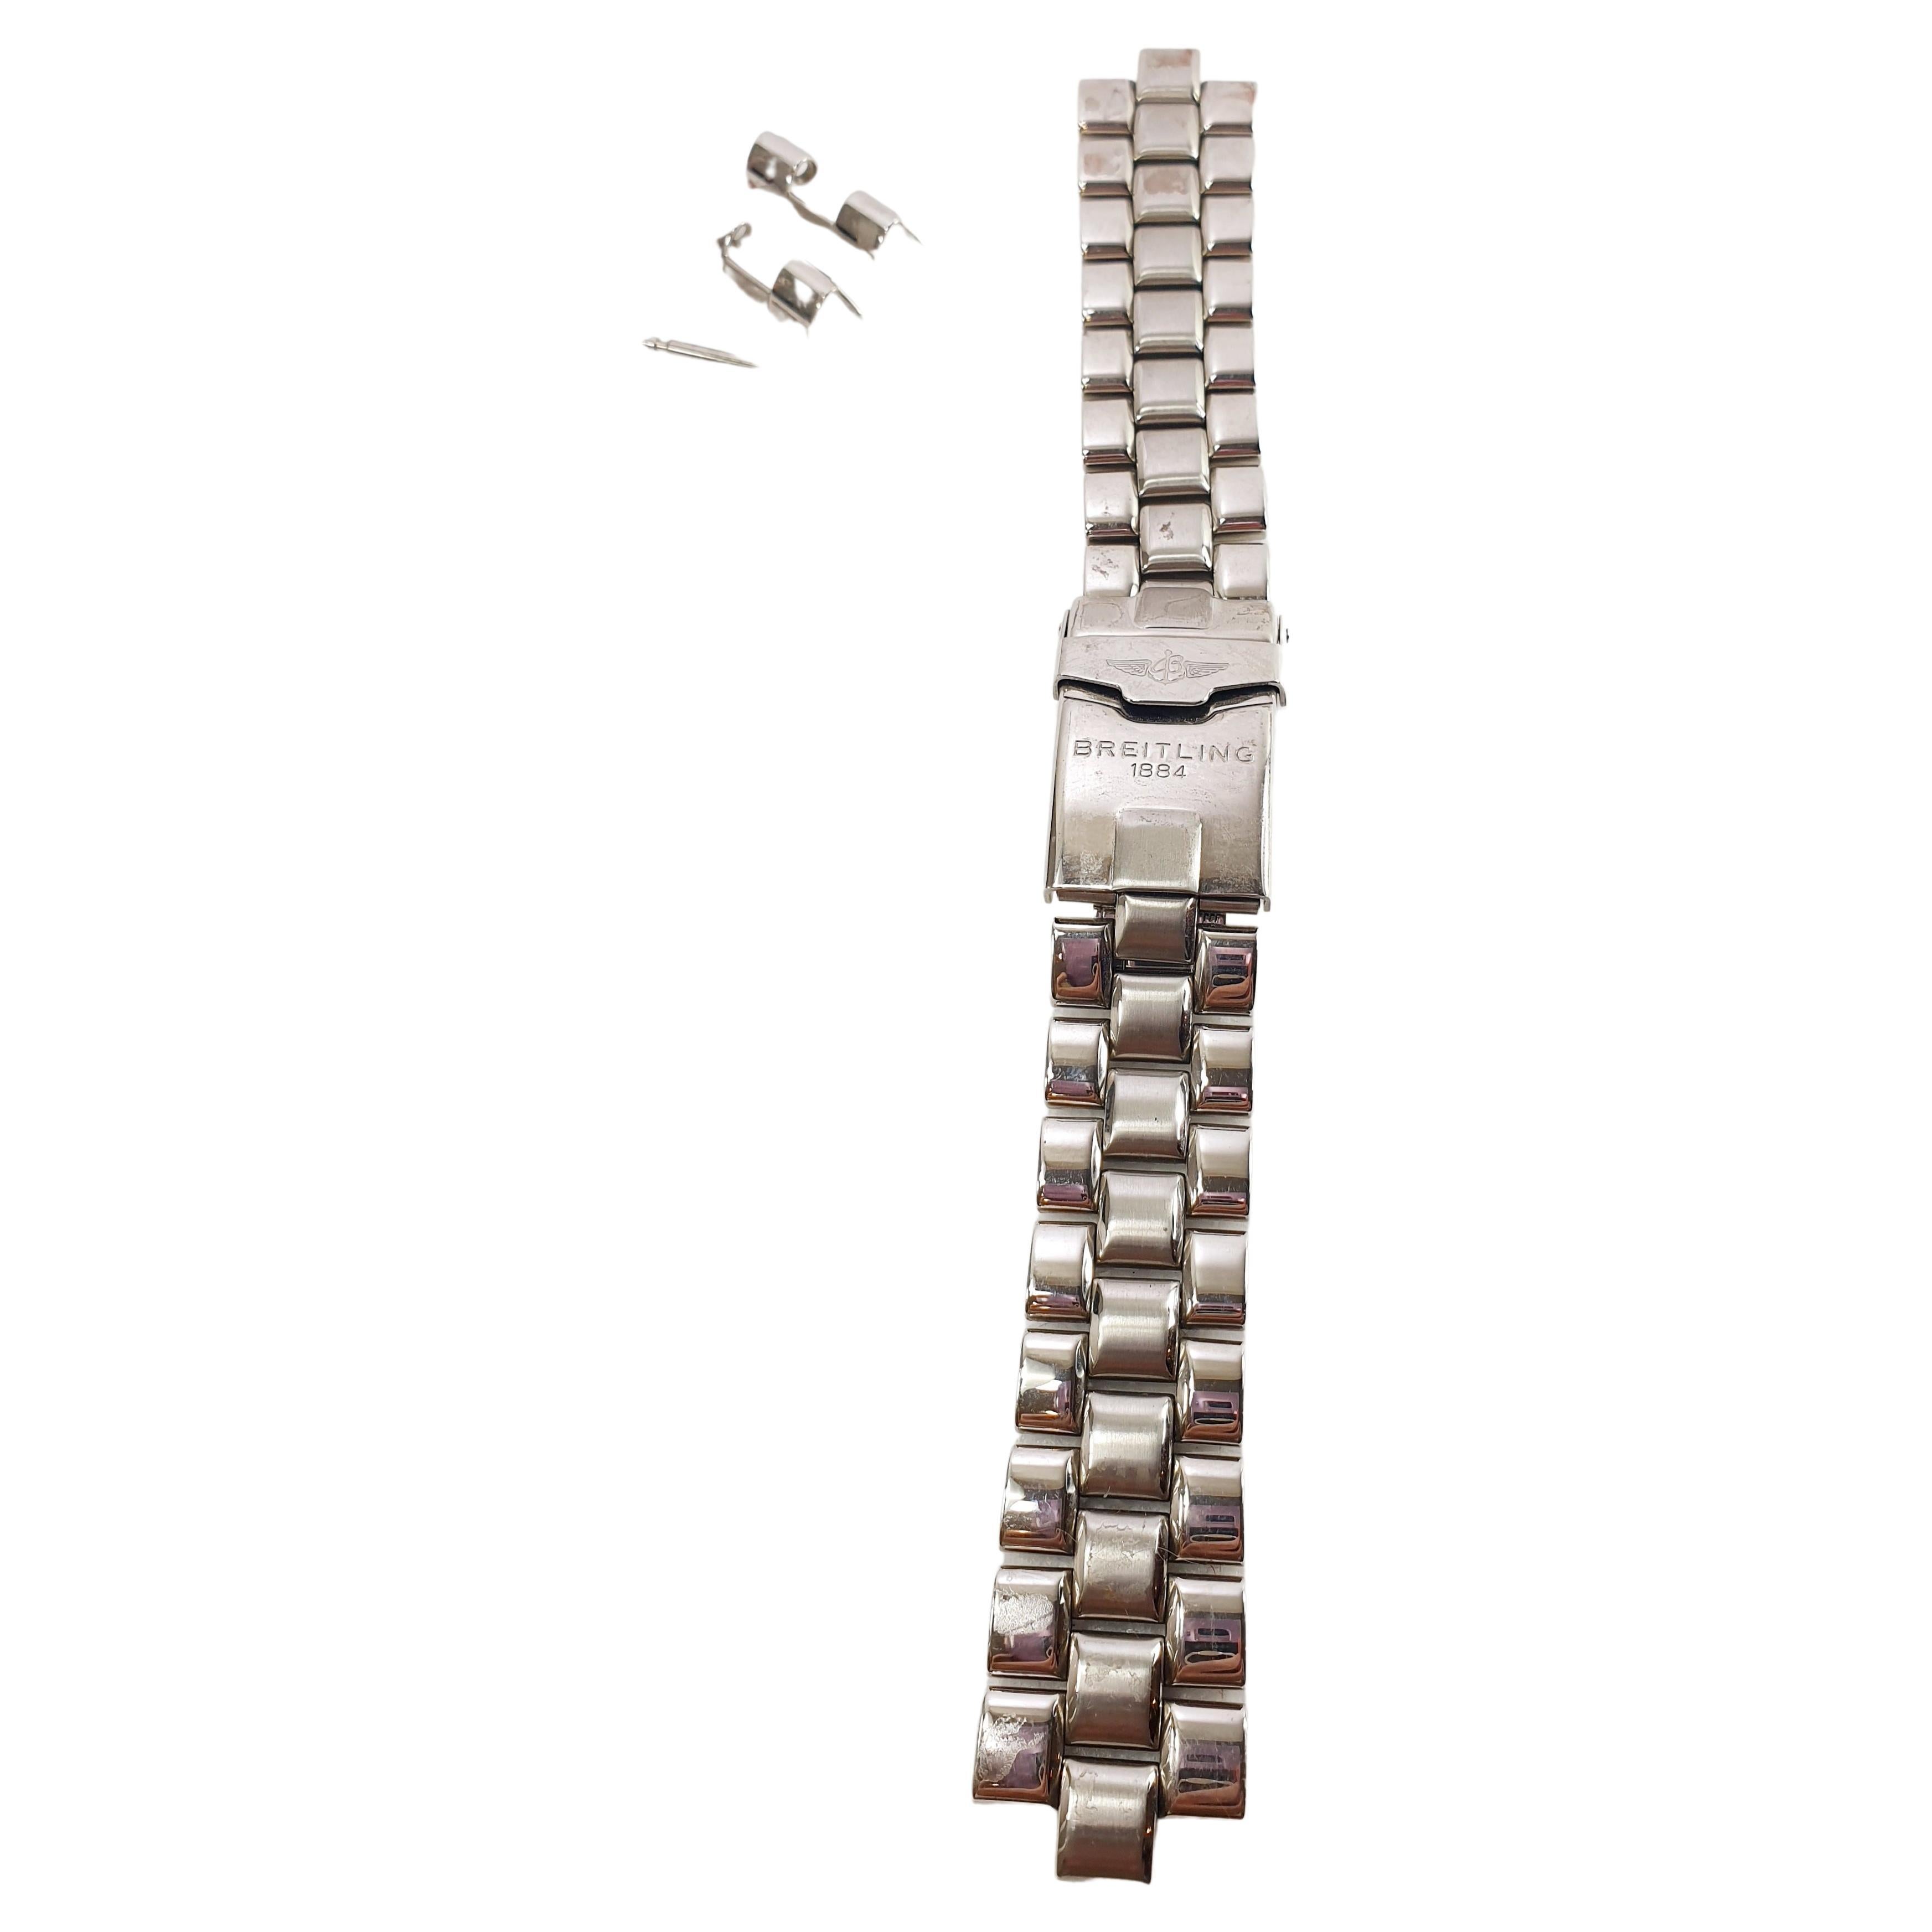 Edelstahl-Breitling-Armband im Angebot